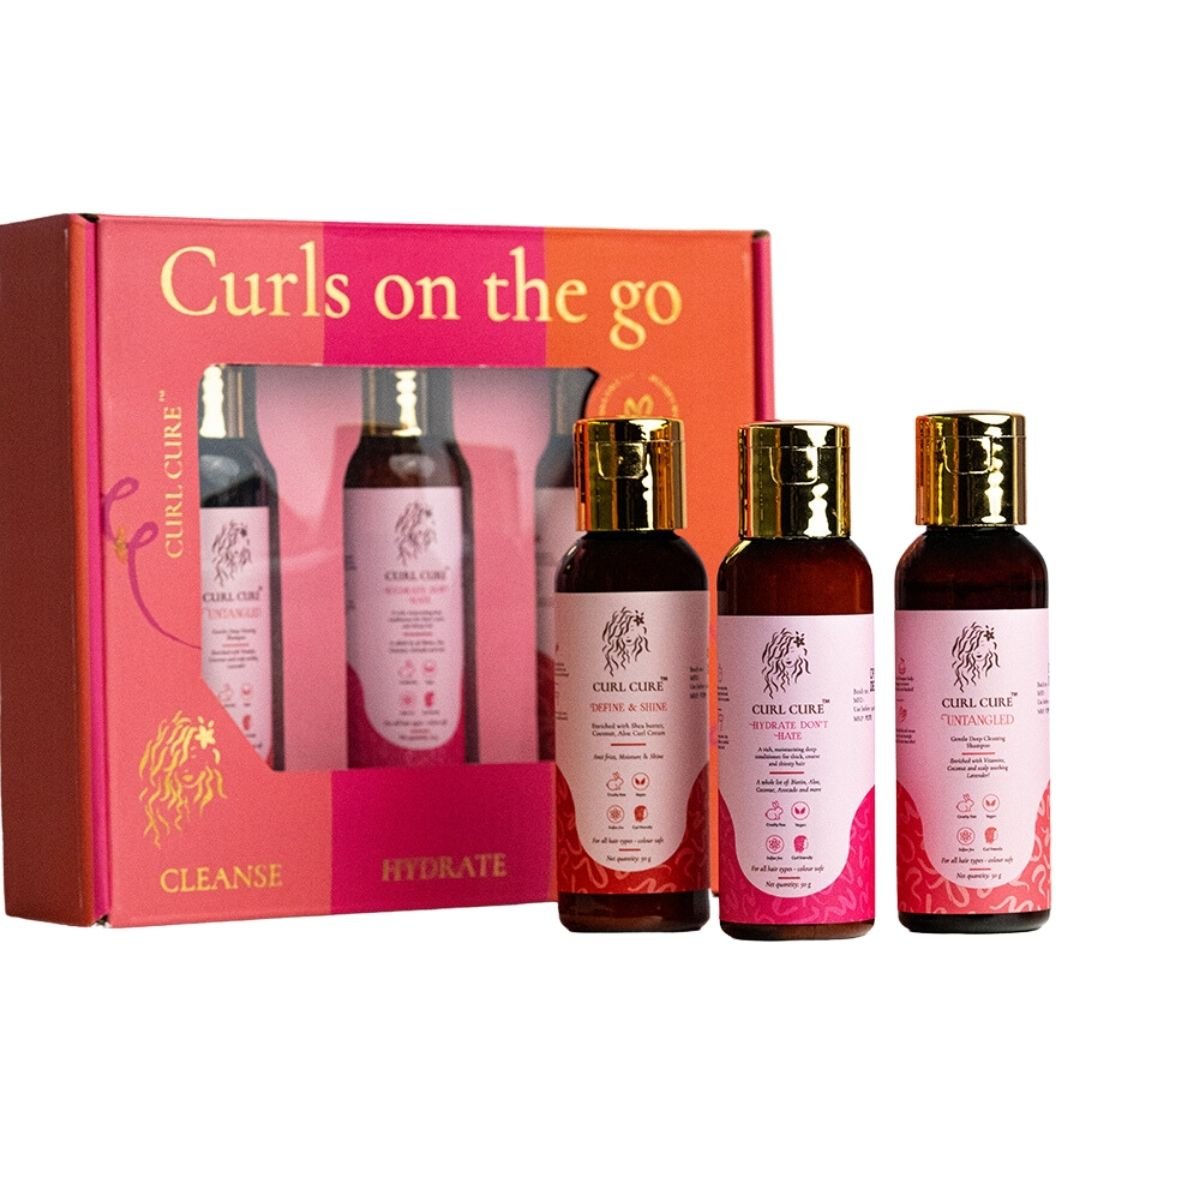 Restart Kit (Hair-tox & Travel Kit) - Curl Cure